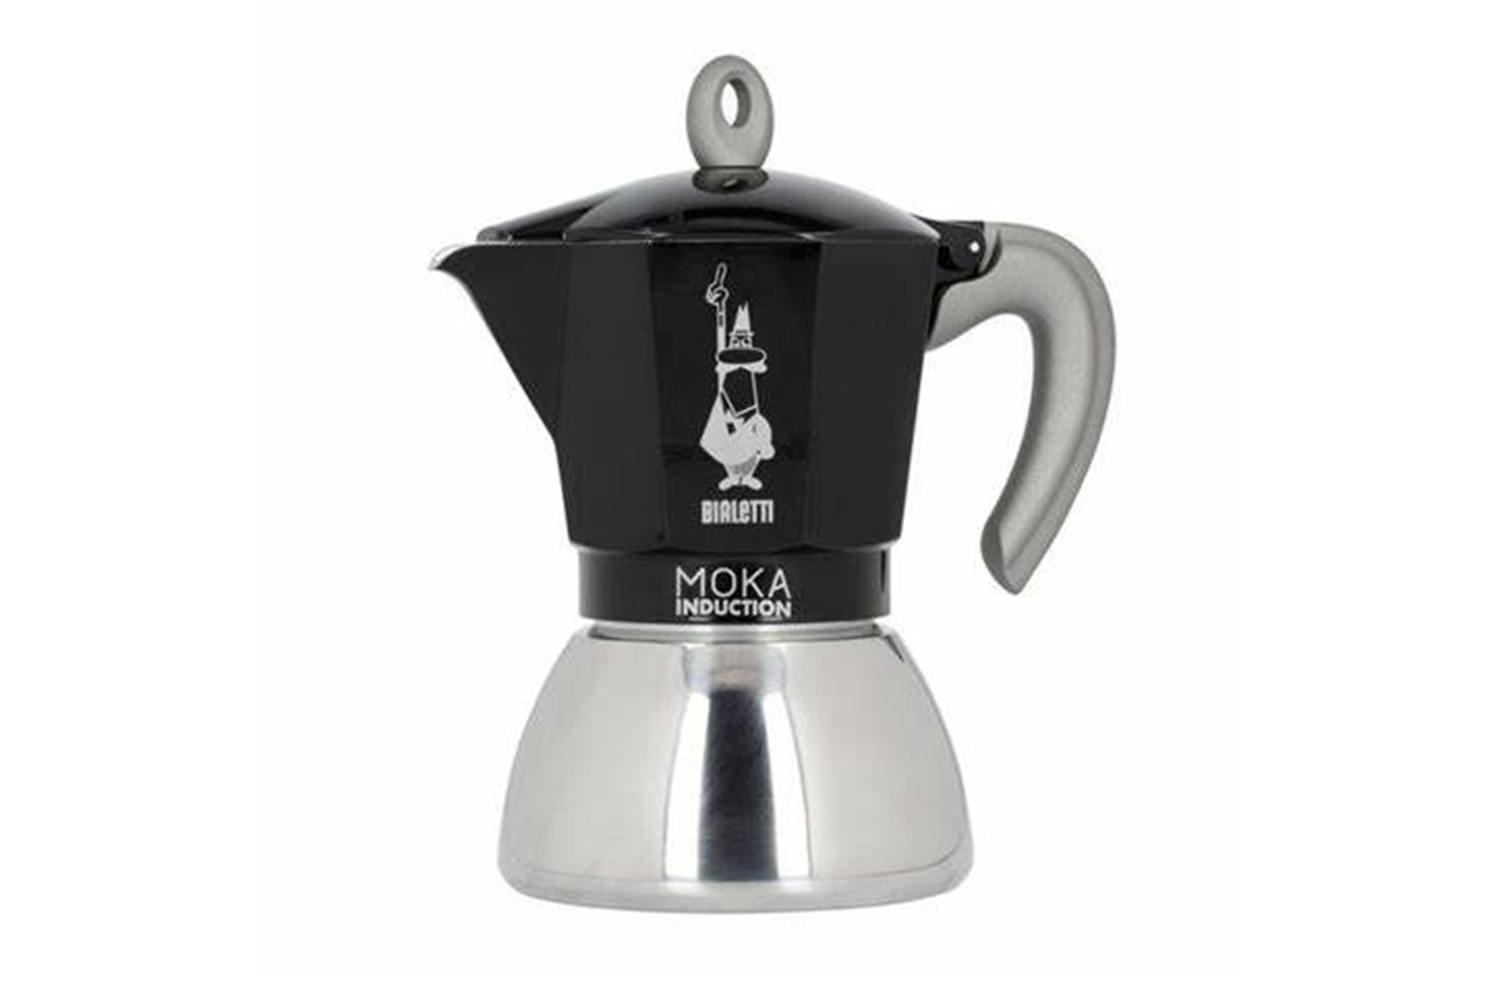 Bialetti Moka Induction 6 Cup Espresso Maker, Black